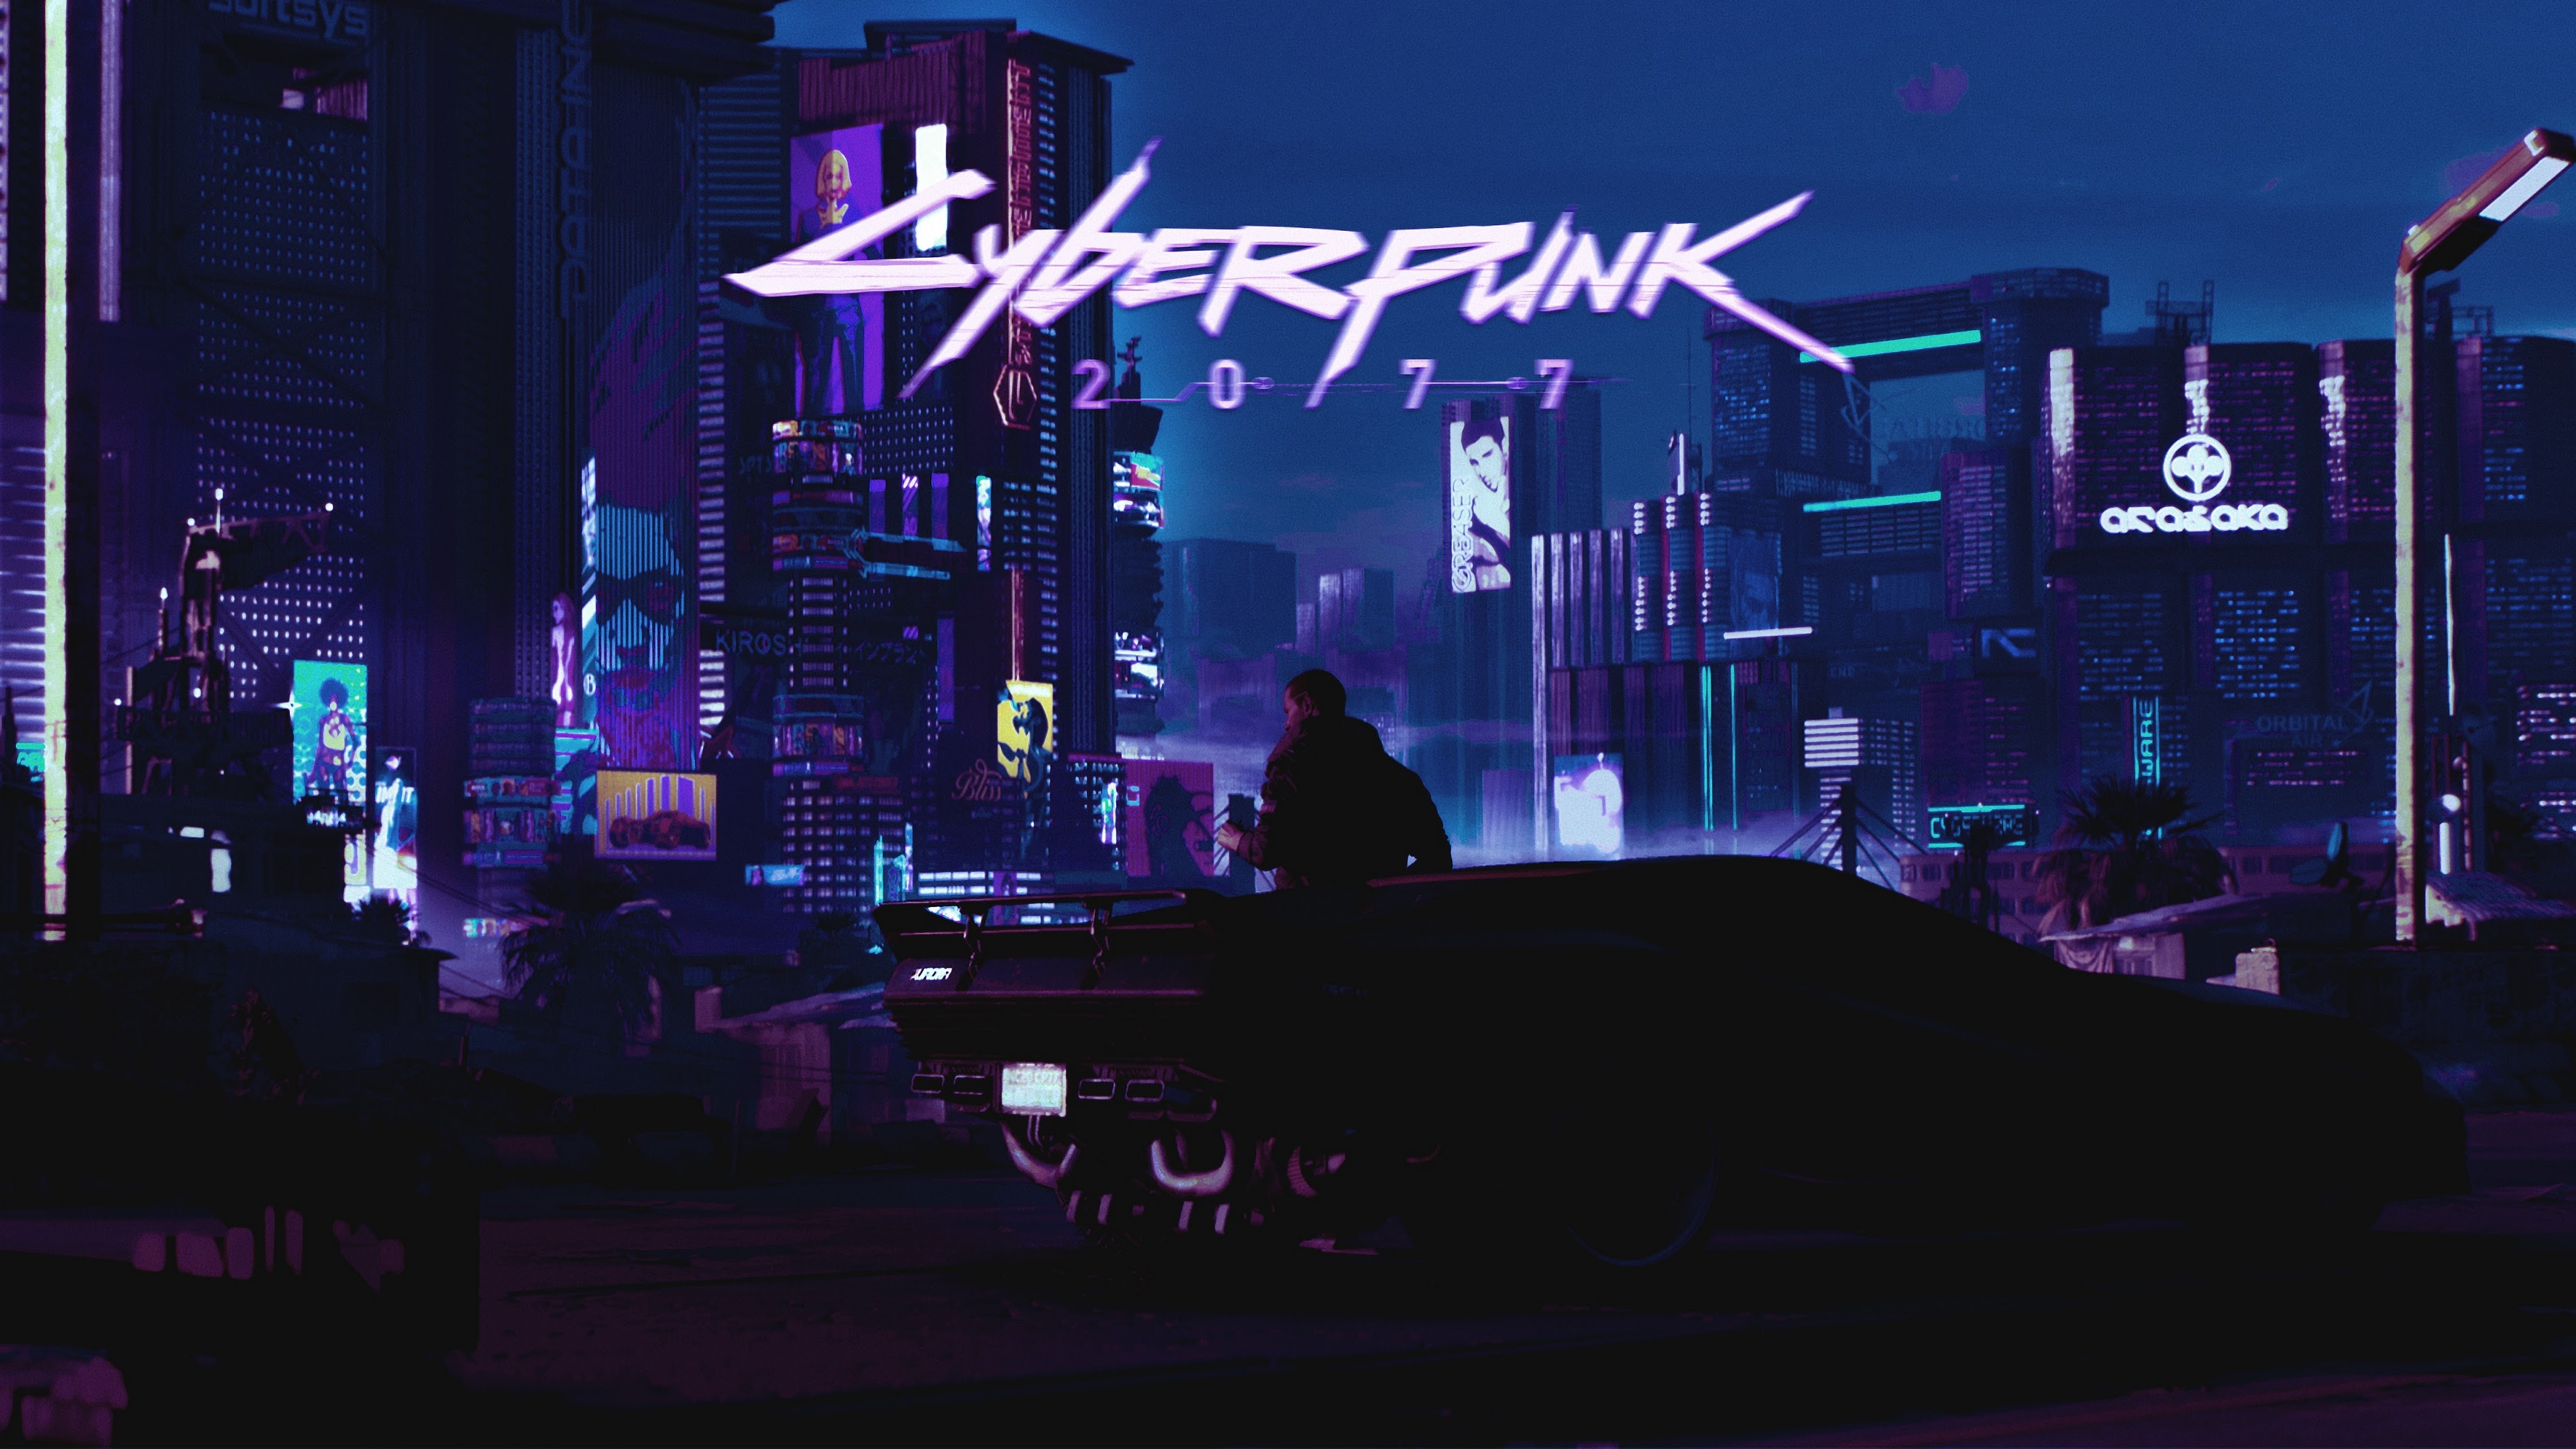 Cyberpunk Car Night City 4K Wallpaper #6.2168